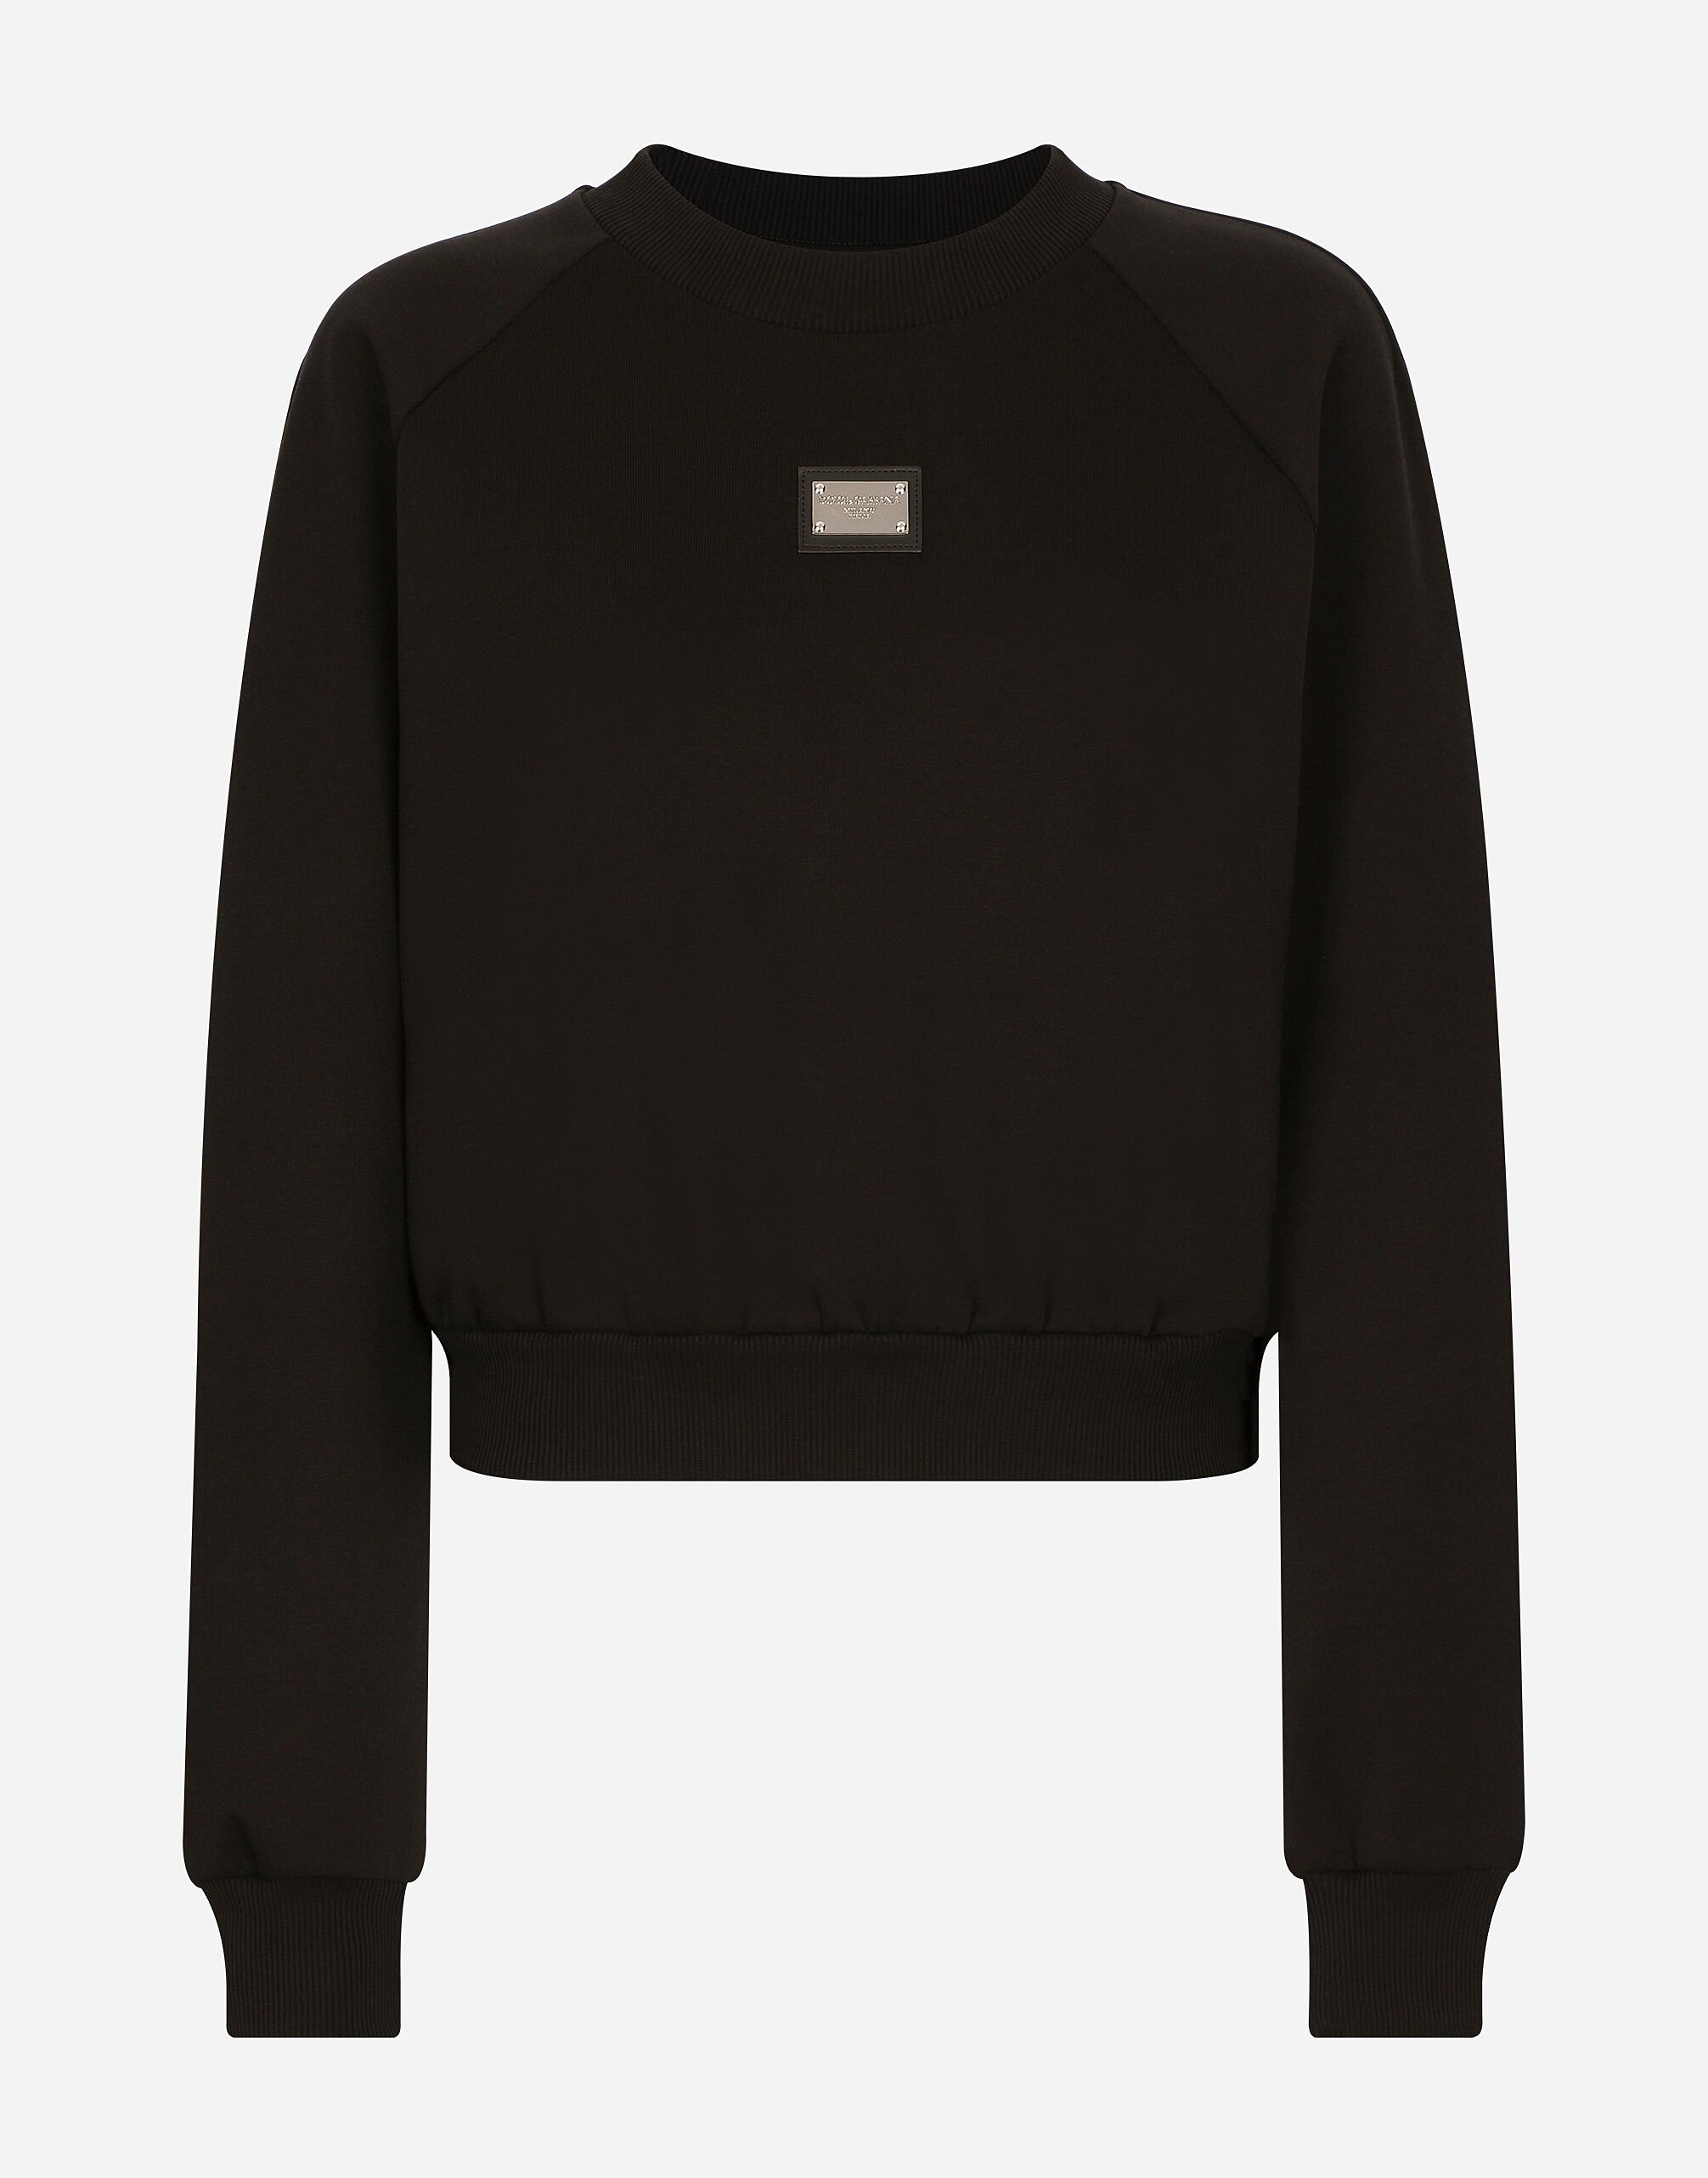 Dolce&Gabbana Technical jersey sweatshirt with Dolce&Gabbana tag Black F79BRTHLM9K